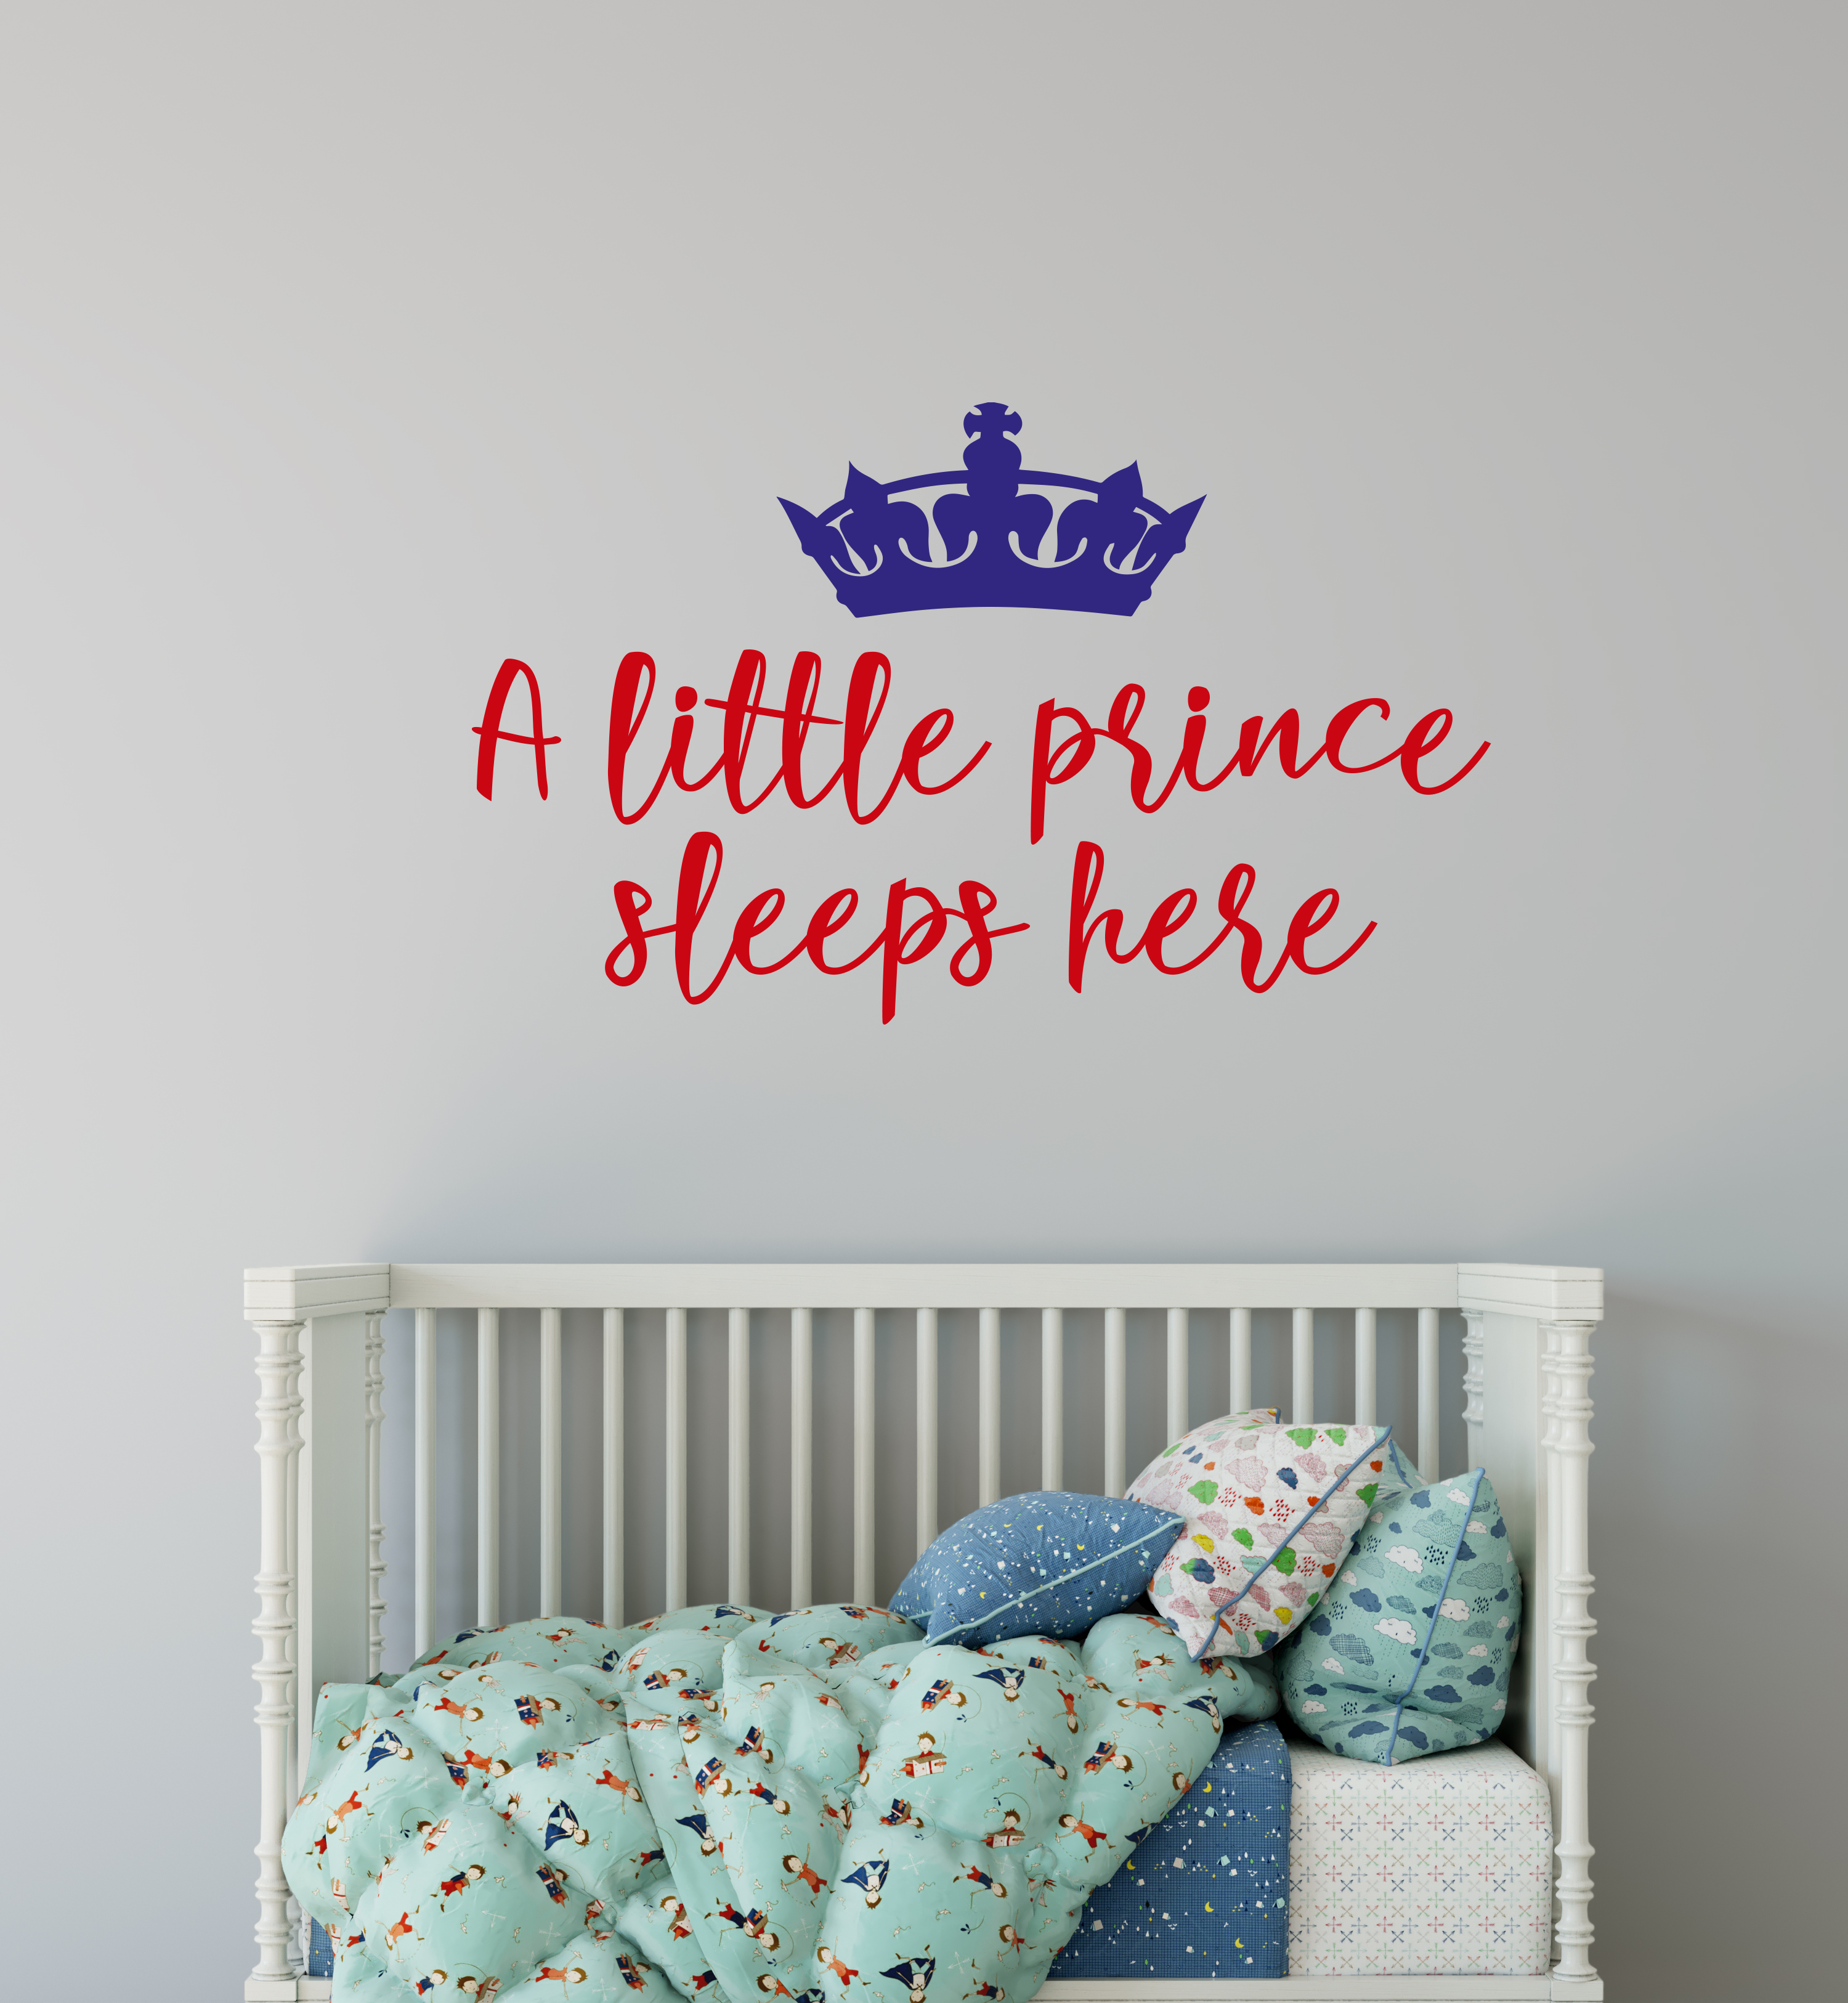 A Little Prince Sleeps Here